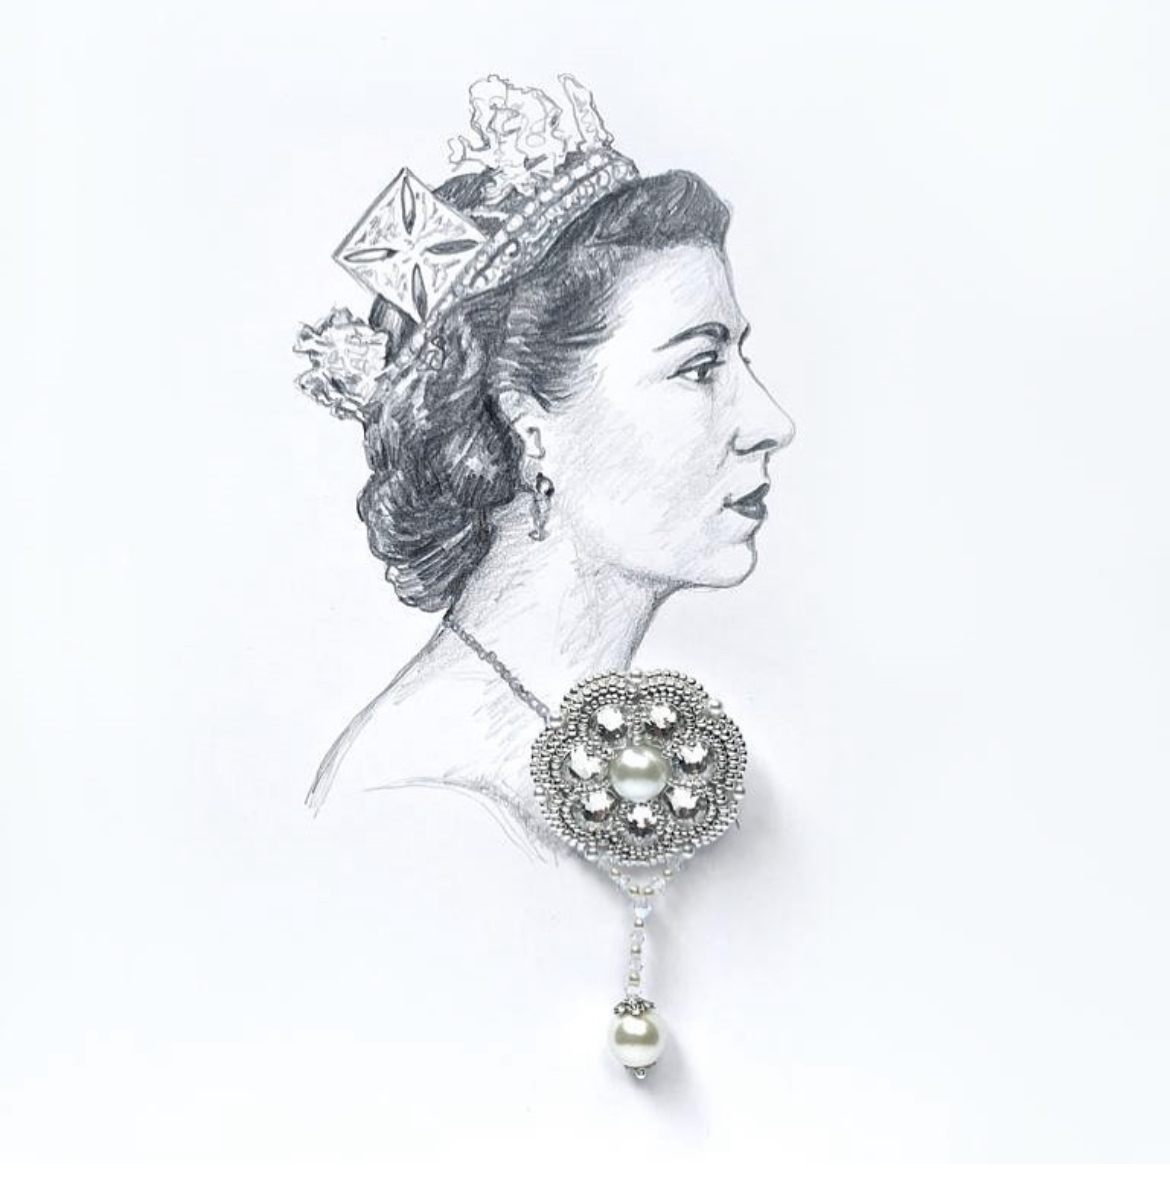 Skvost pod záštitou britského veľvyslanca predstavil kolekciu Her Majesty